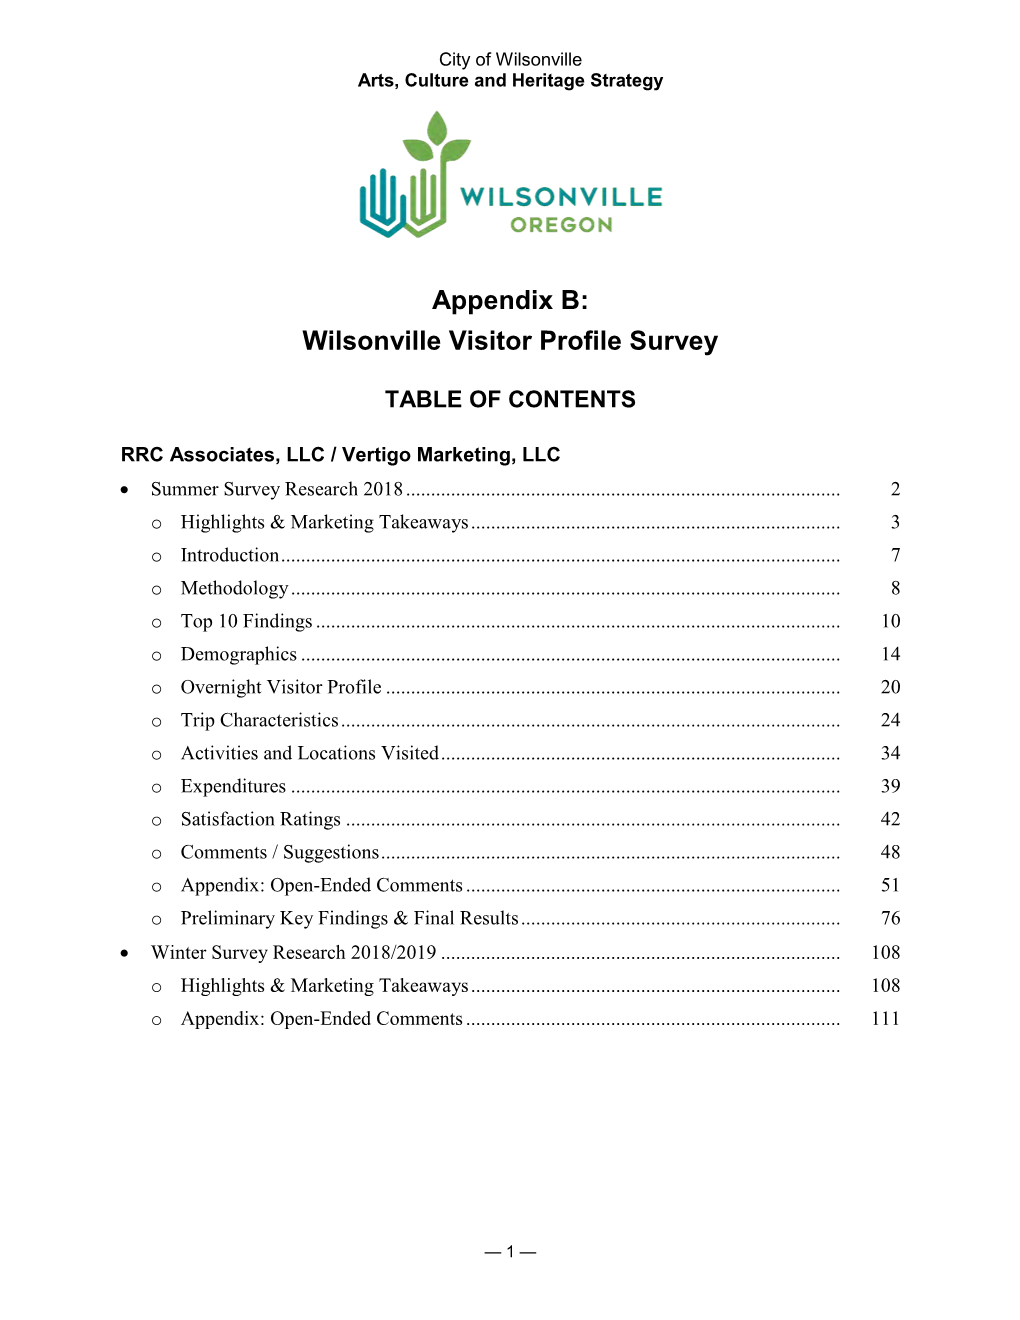 Appendix B: Wilsonville Visitor Profile Survey